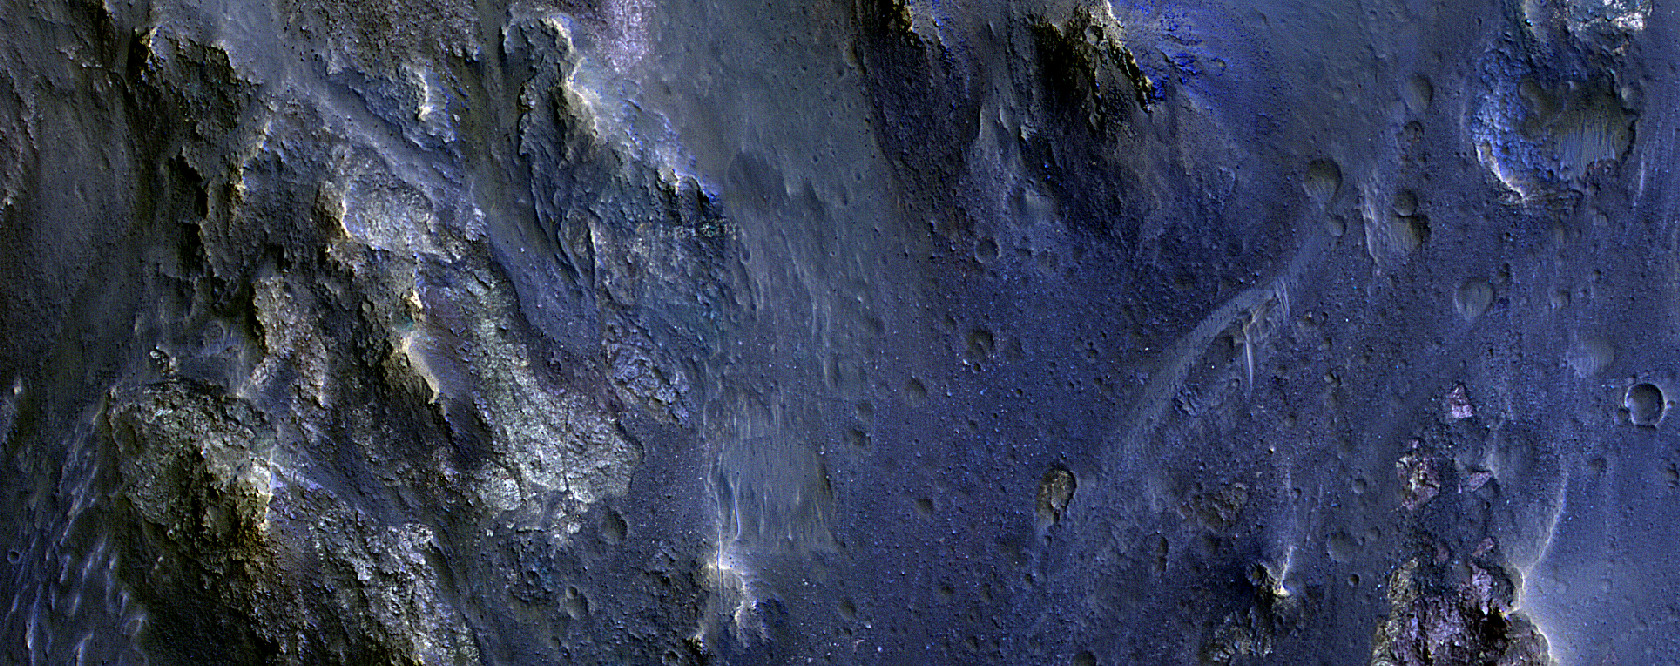 Exposed Bedrock in Eos Chasma